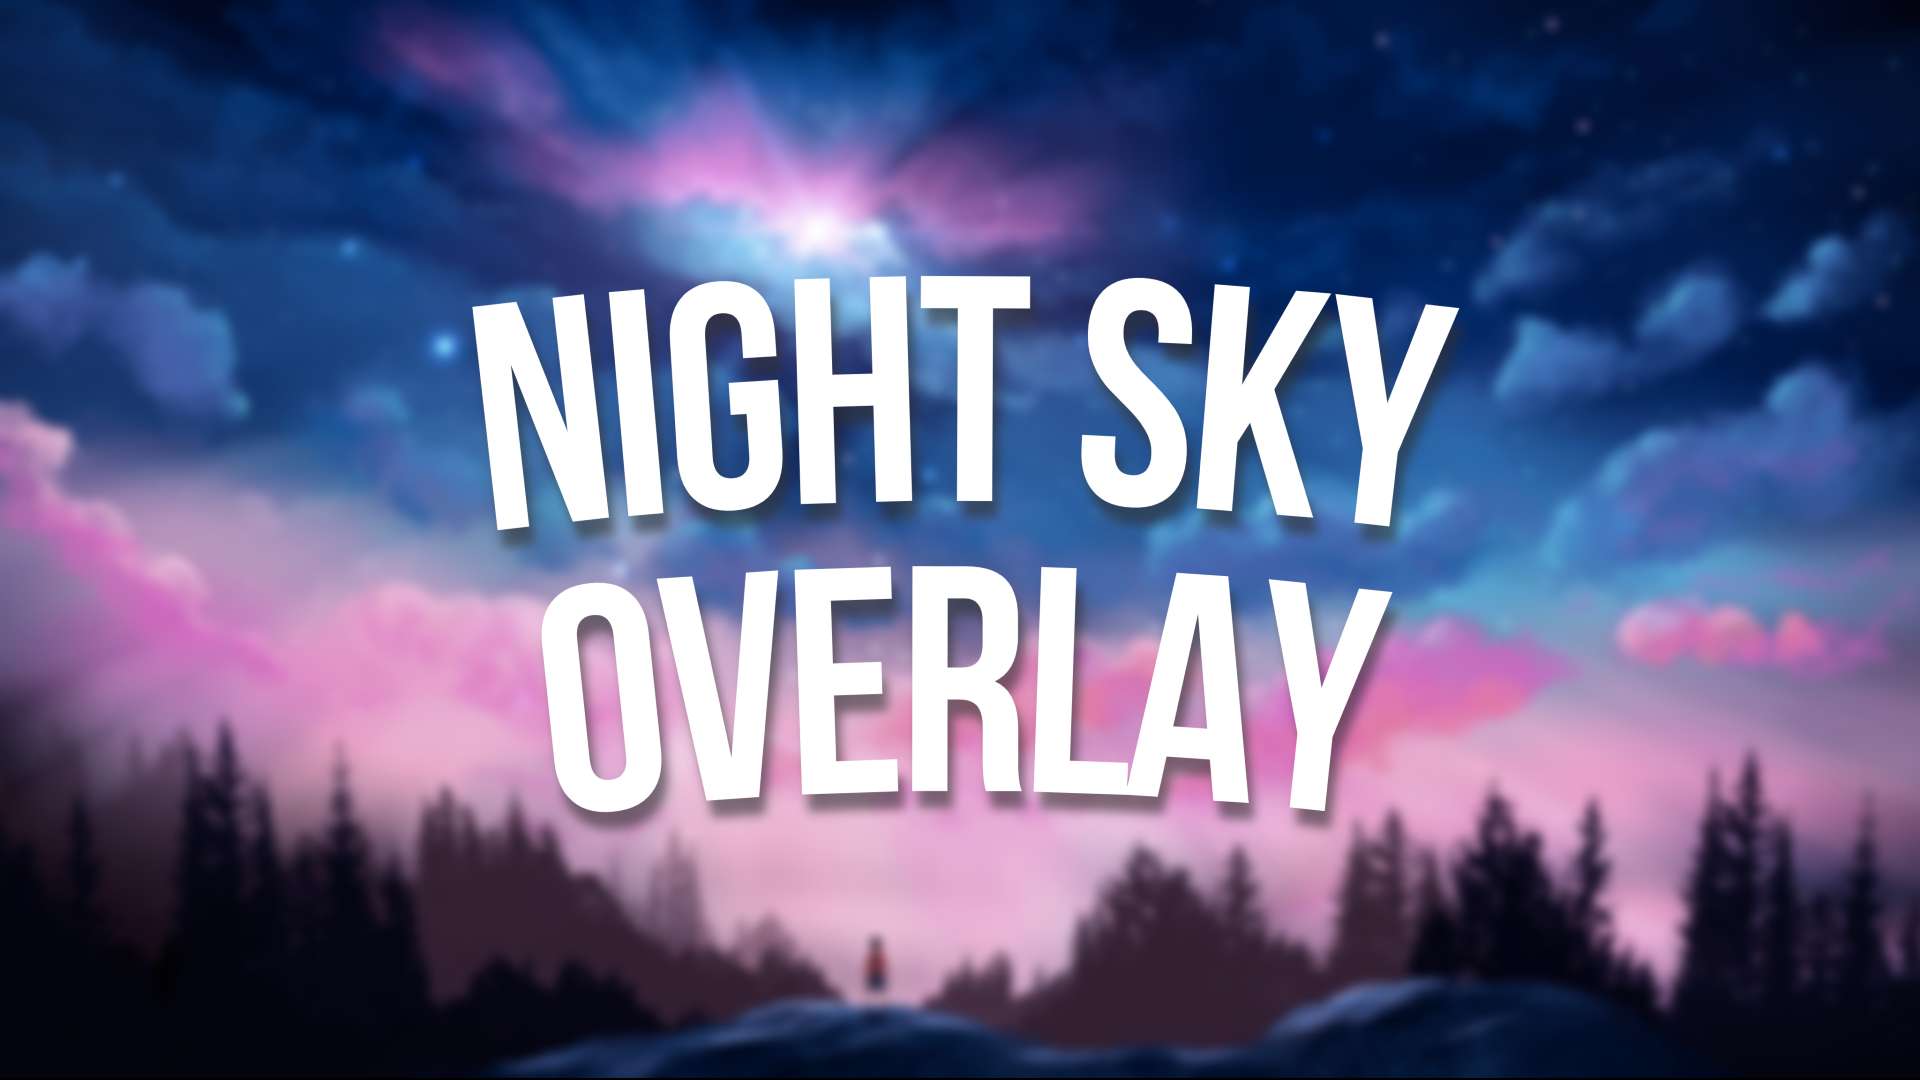 Night Sky Overlay #4 16x by rh56 on PvPRP